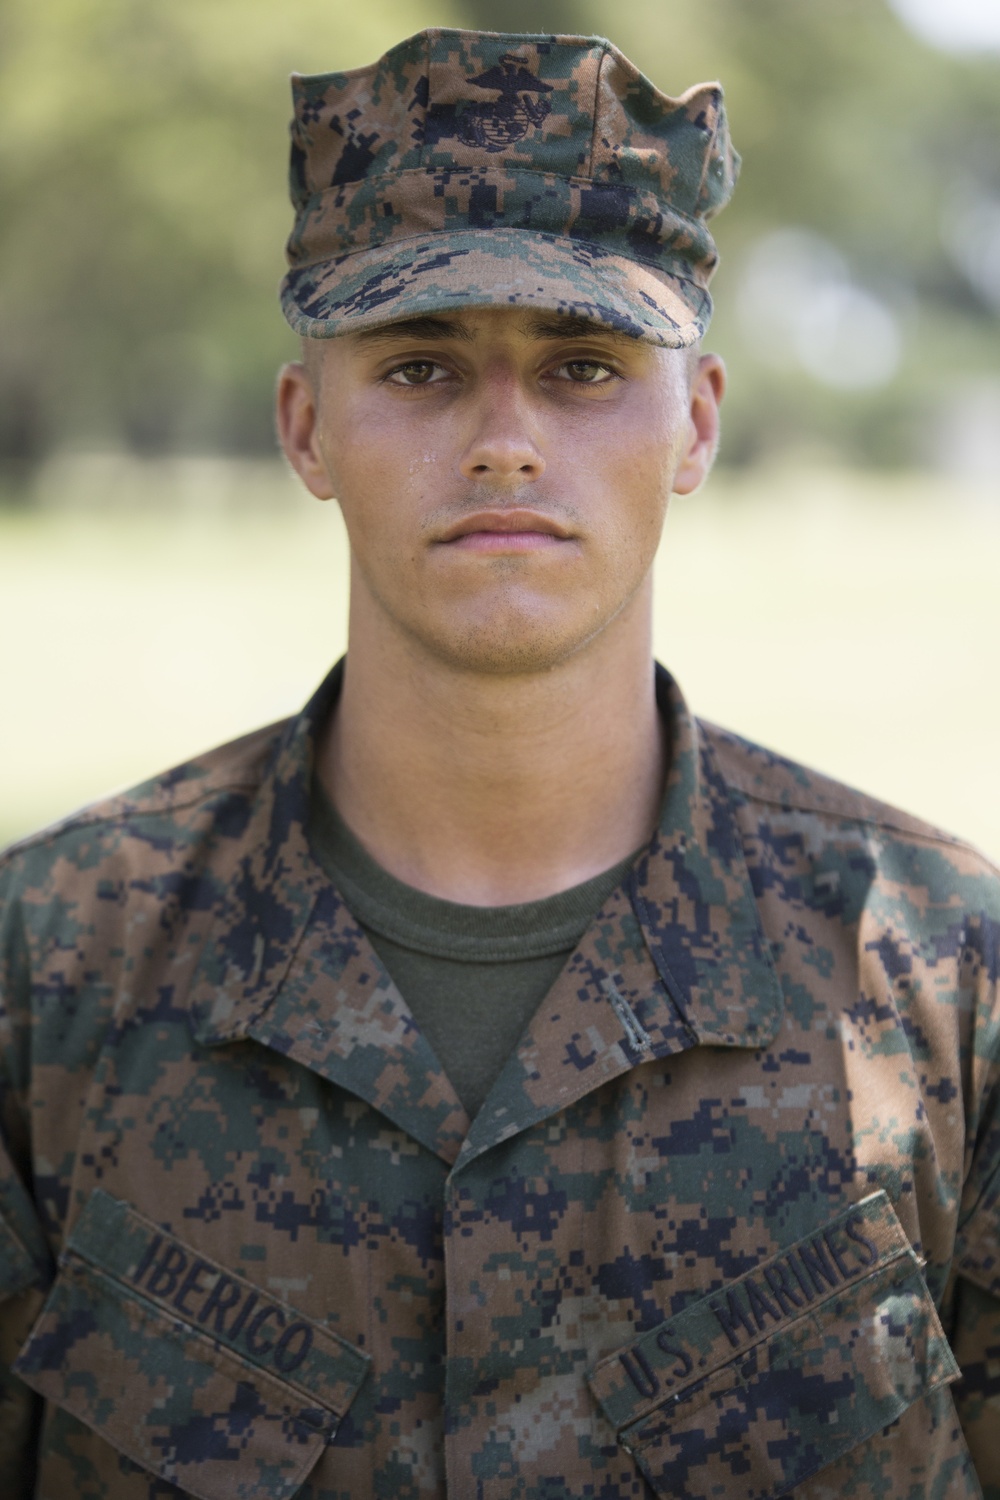 Ponchatoula, La., native training at Parris Island to become U.S. Marine